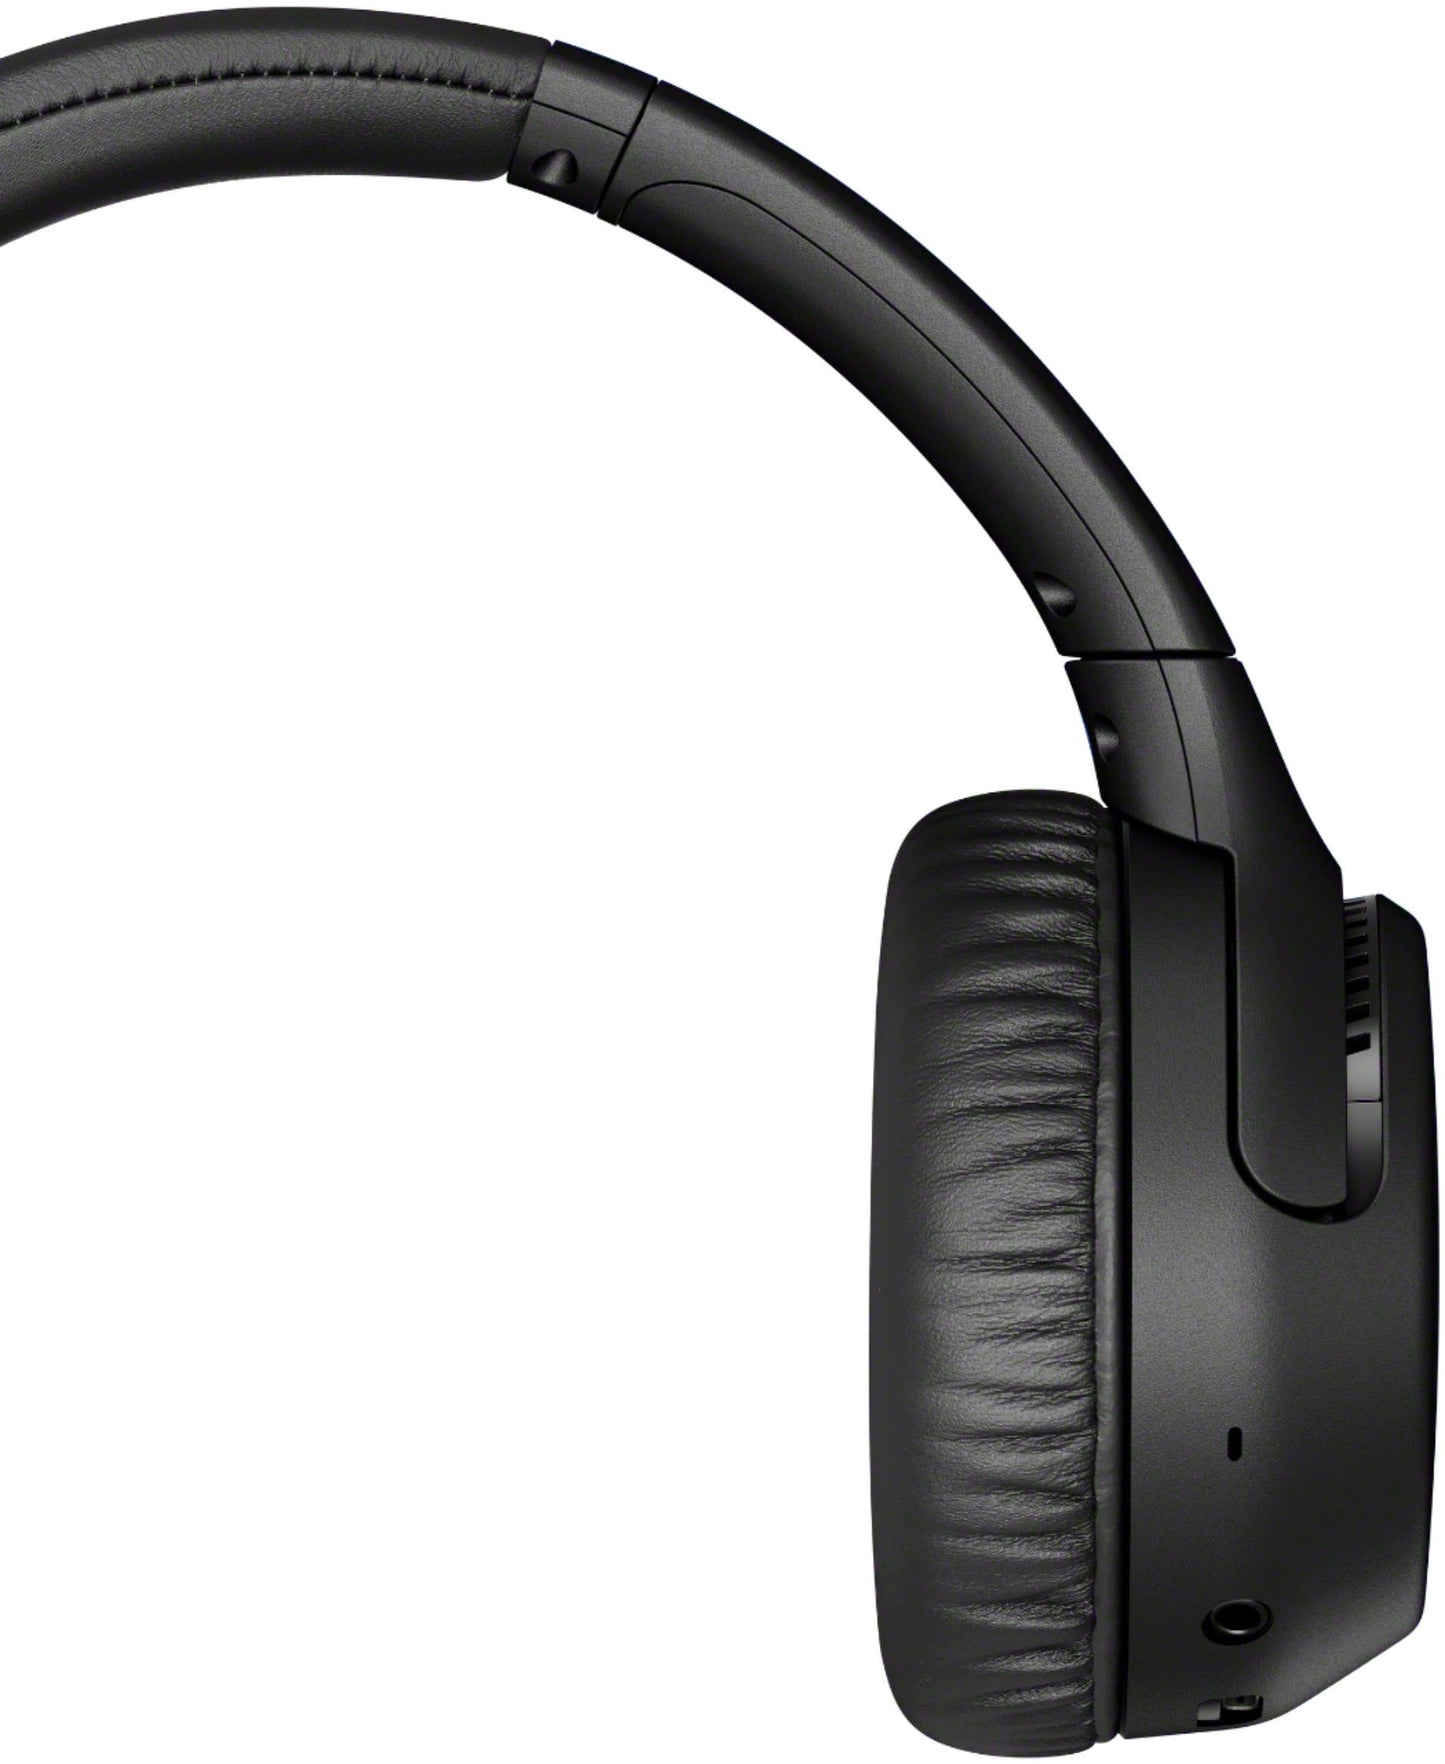 Sony WH-XB700 Wireless Over-Ear Headphones (Black) WHXB700 - Open Box